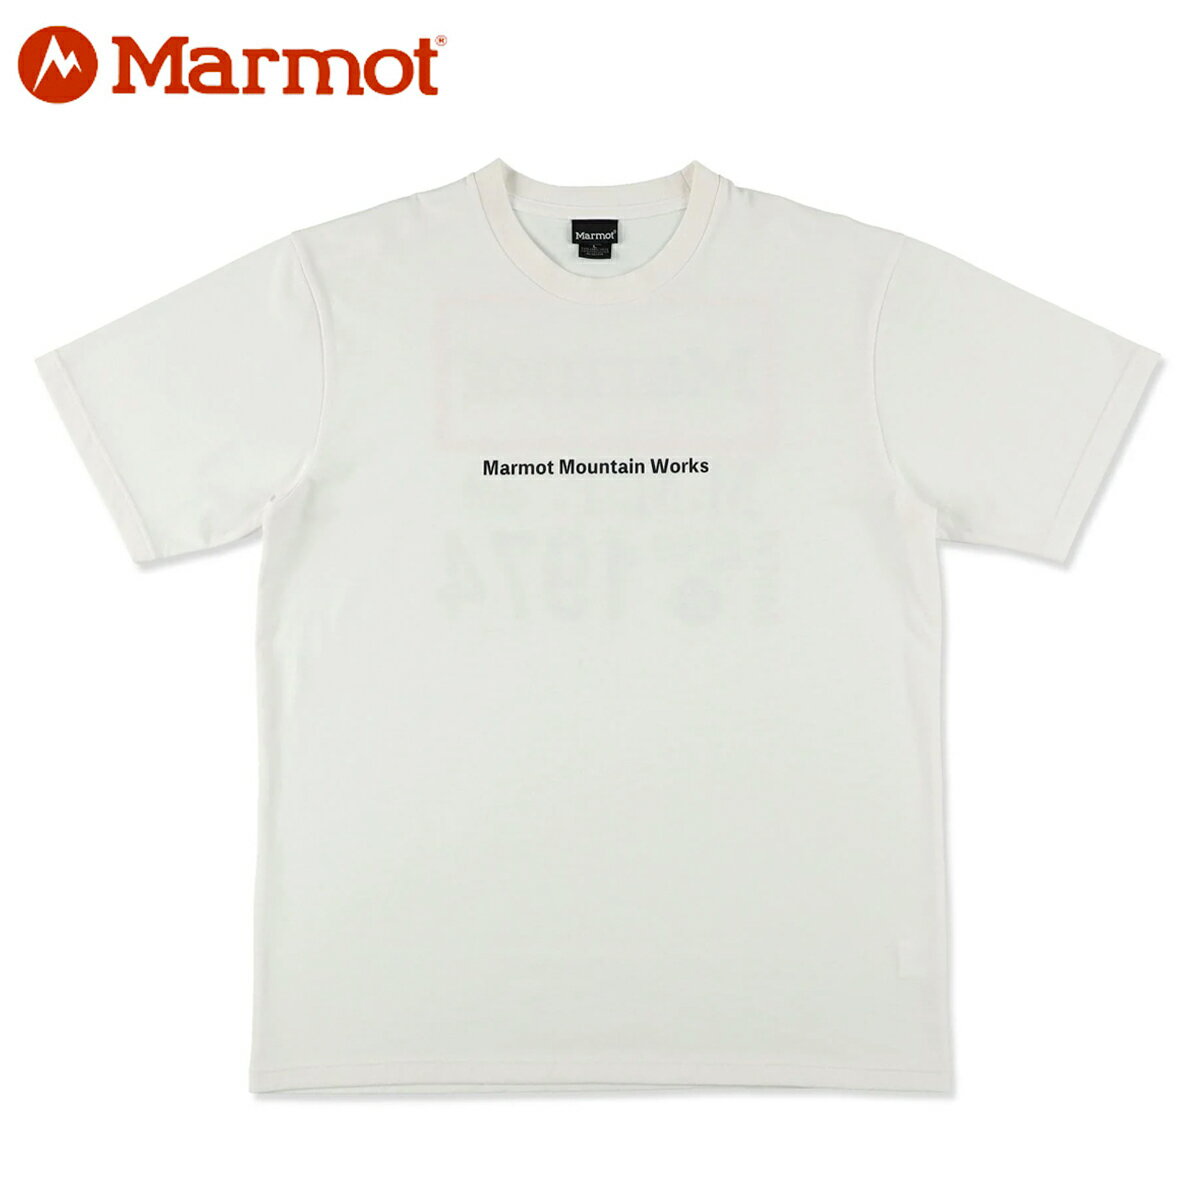 Marmot MMW COLLECTION LOGO-T マーモット MMW コレクション ロゴ Tシャツ メンズ レディース 半袖Tシャツ BWT ホワイト TSSMC404-BWT【追跡可能メール便・日時指定不可】 1